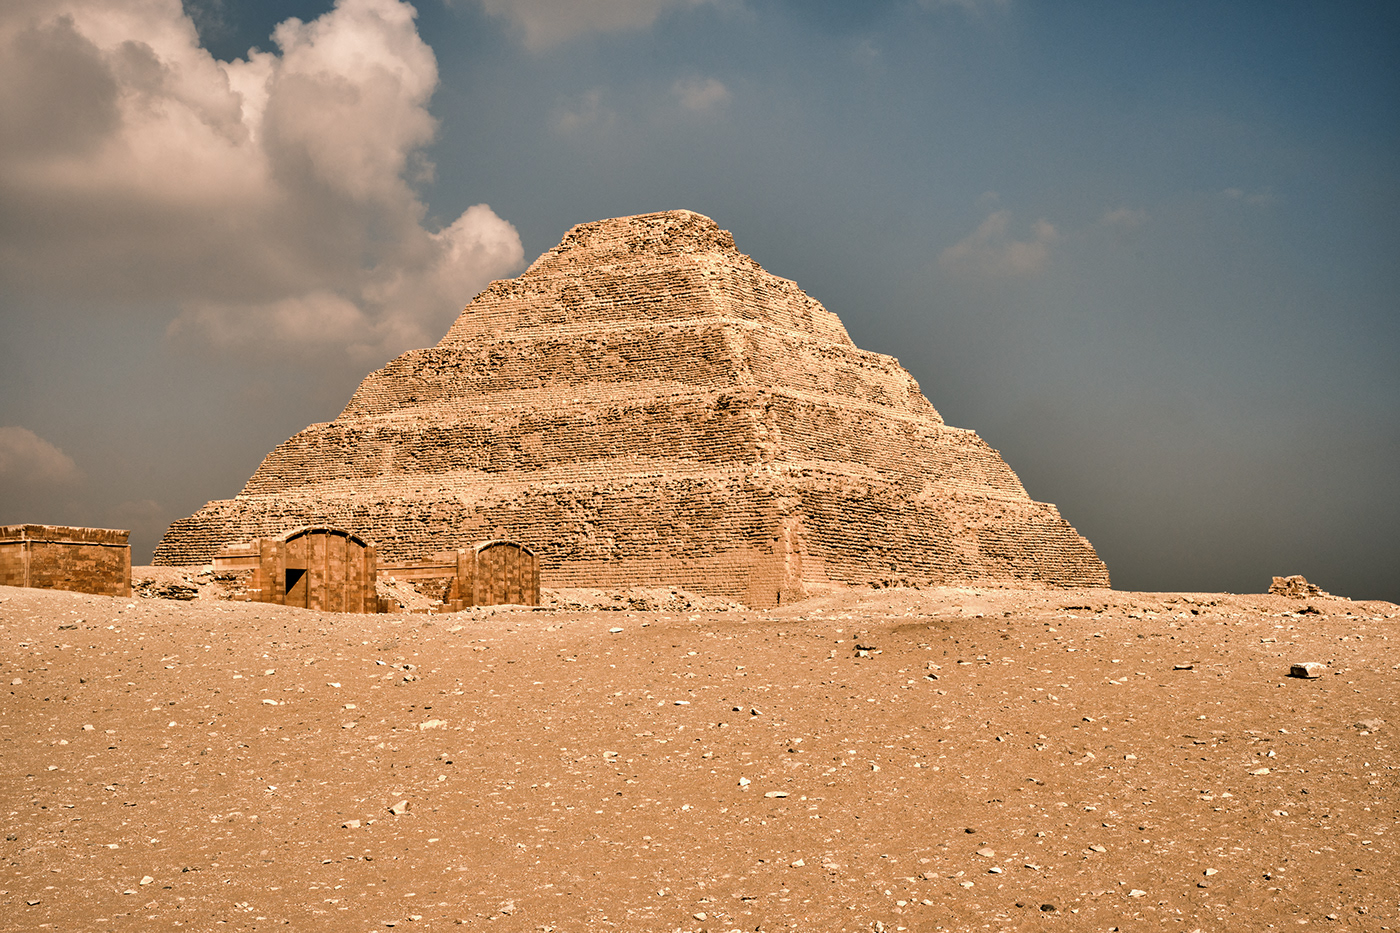 street photography travel photography egypt archeology Ancient Civilization Landscape portrait Midle East